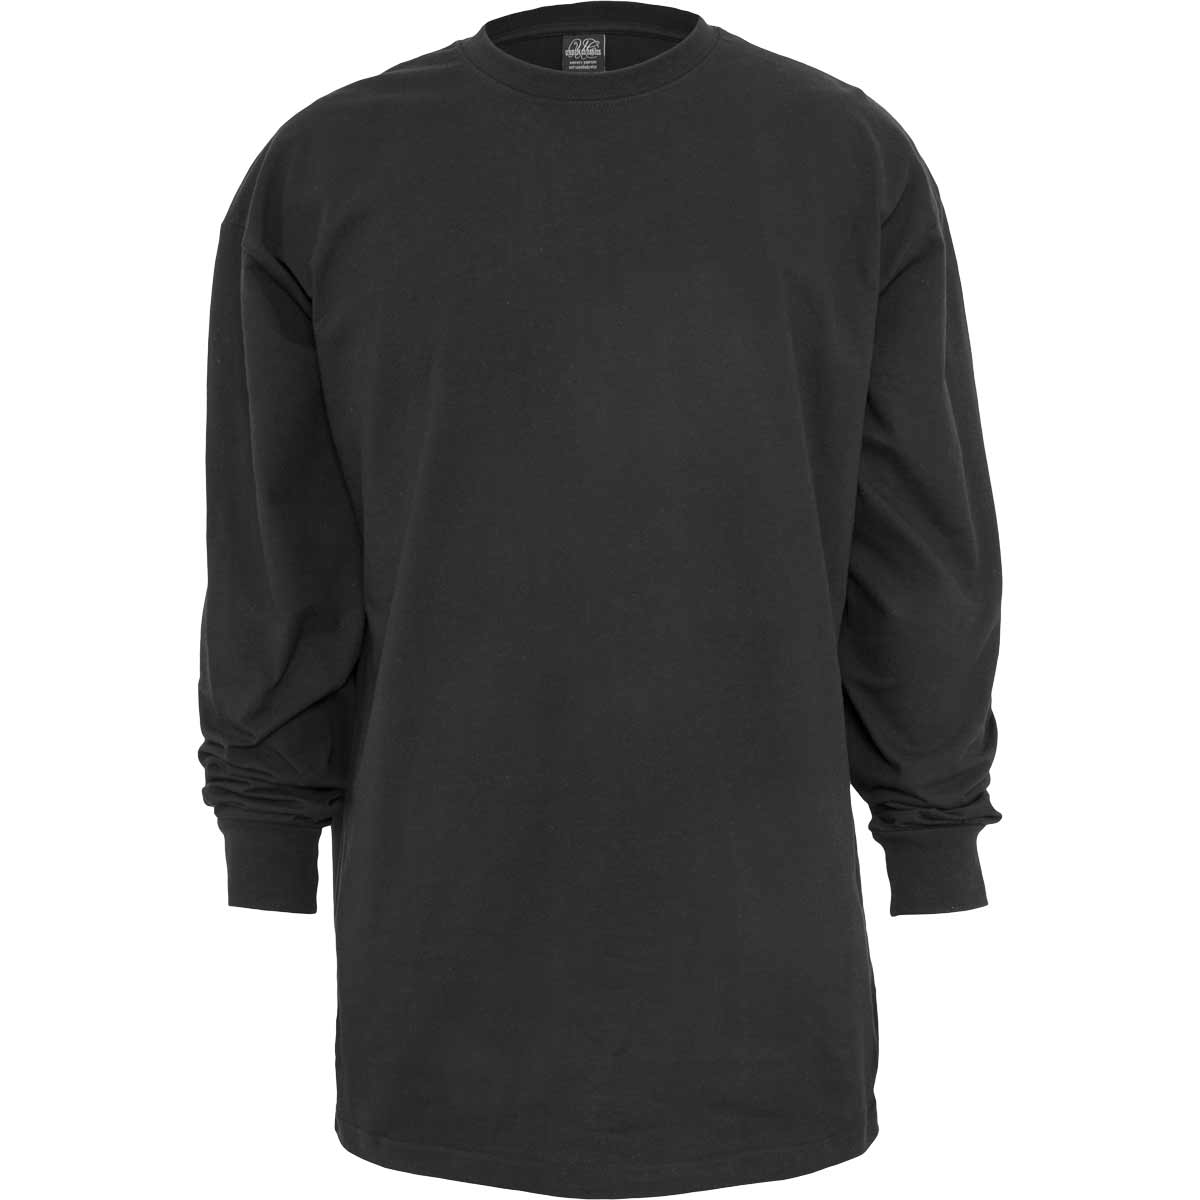 Urban Classics Langarmshirt schwarz große Größen | bigtex